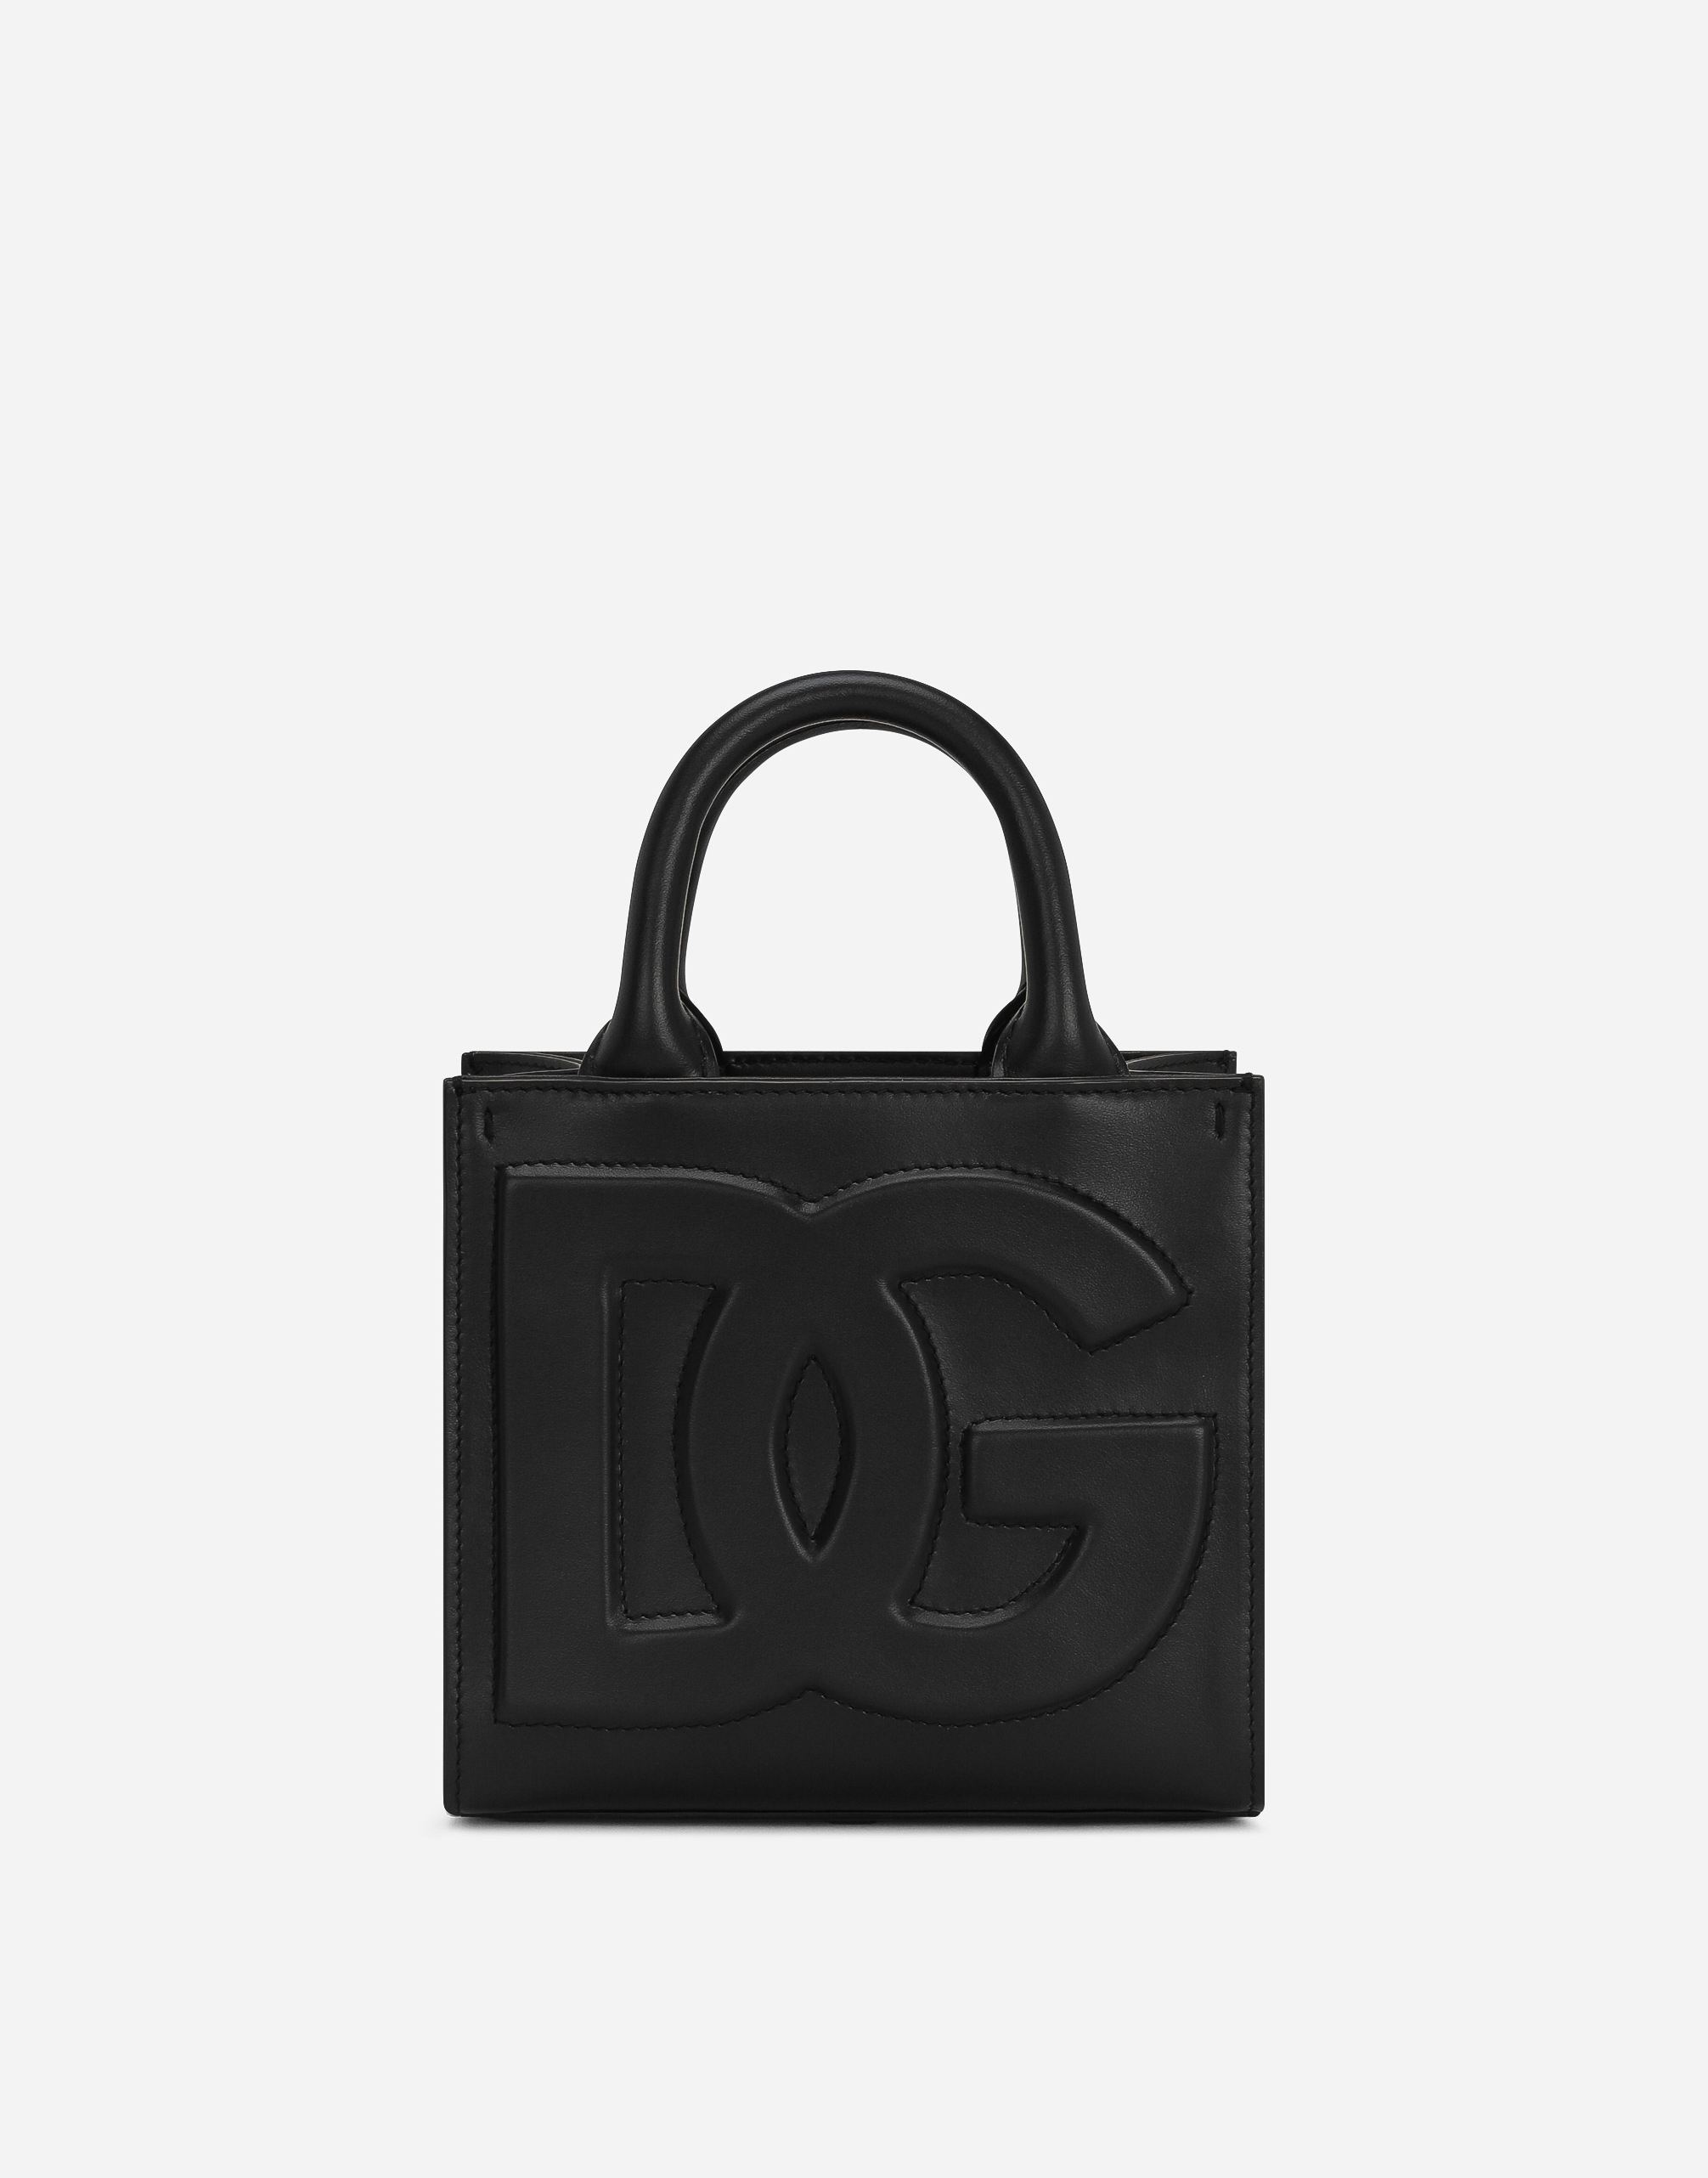 DG Daily Mini Leather Tote Bag in White - Dolce Gabbana